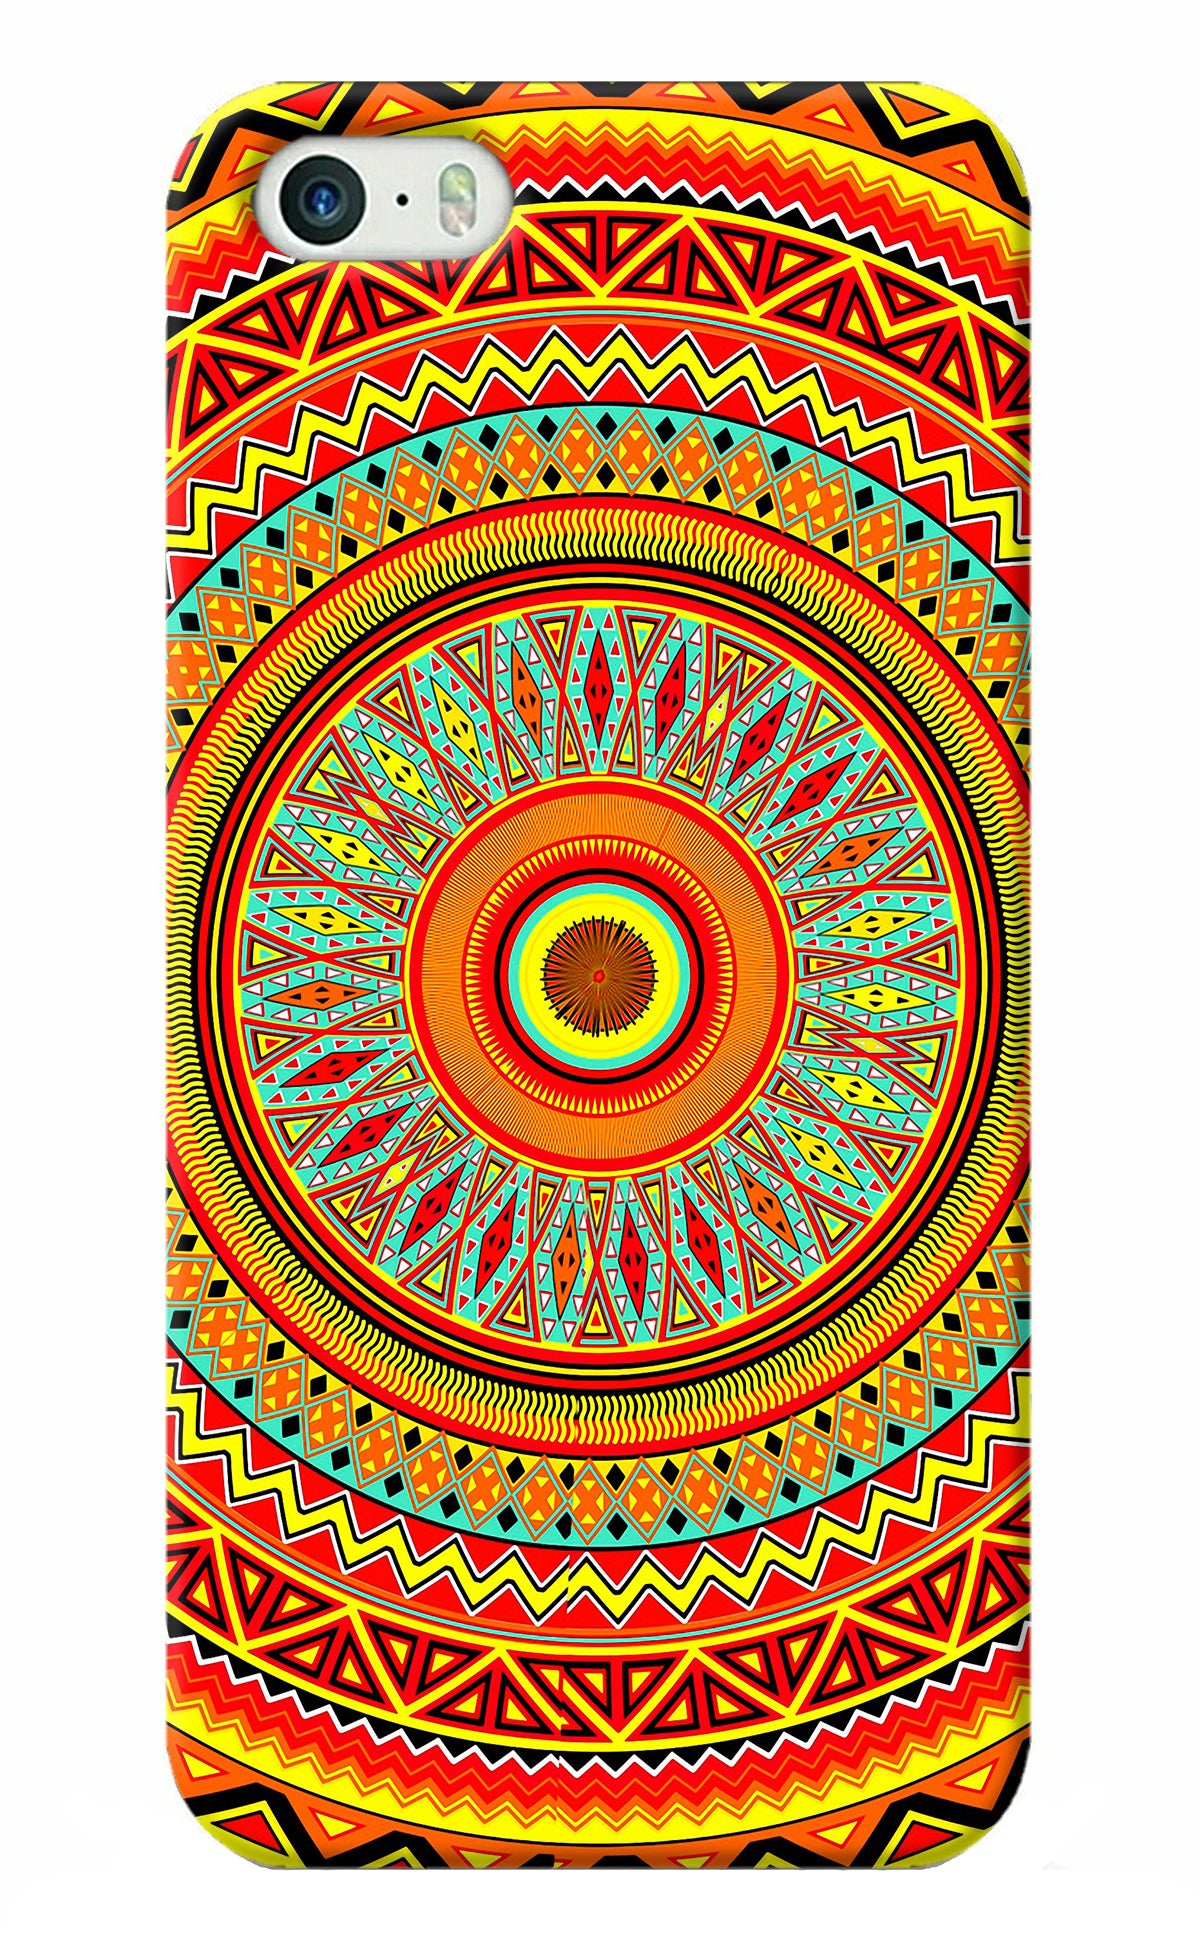 Mandala Pattern iPhone 5/5s Back Cover